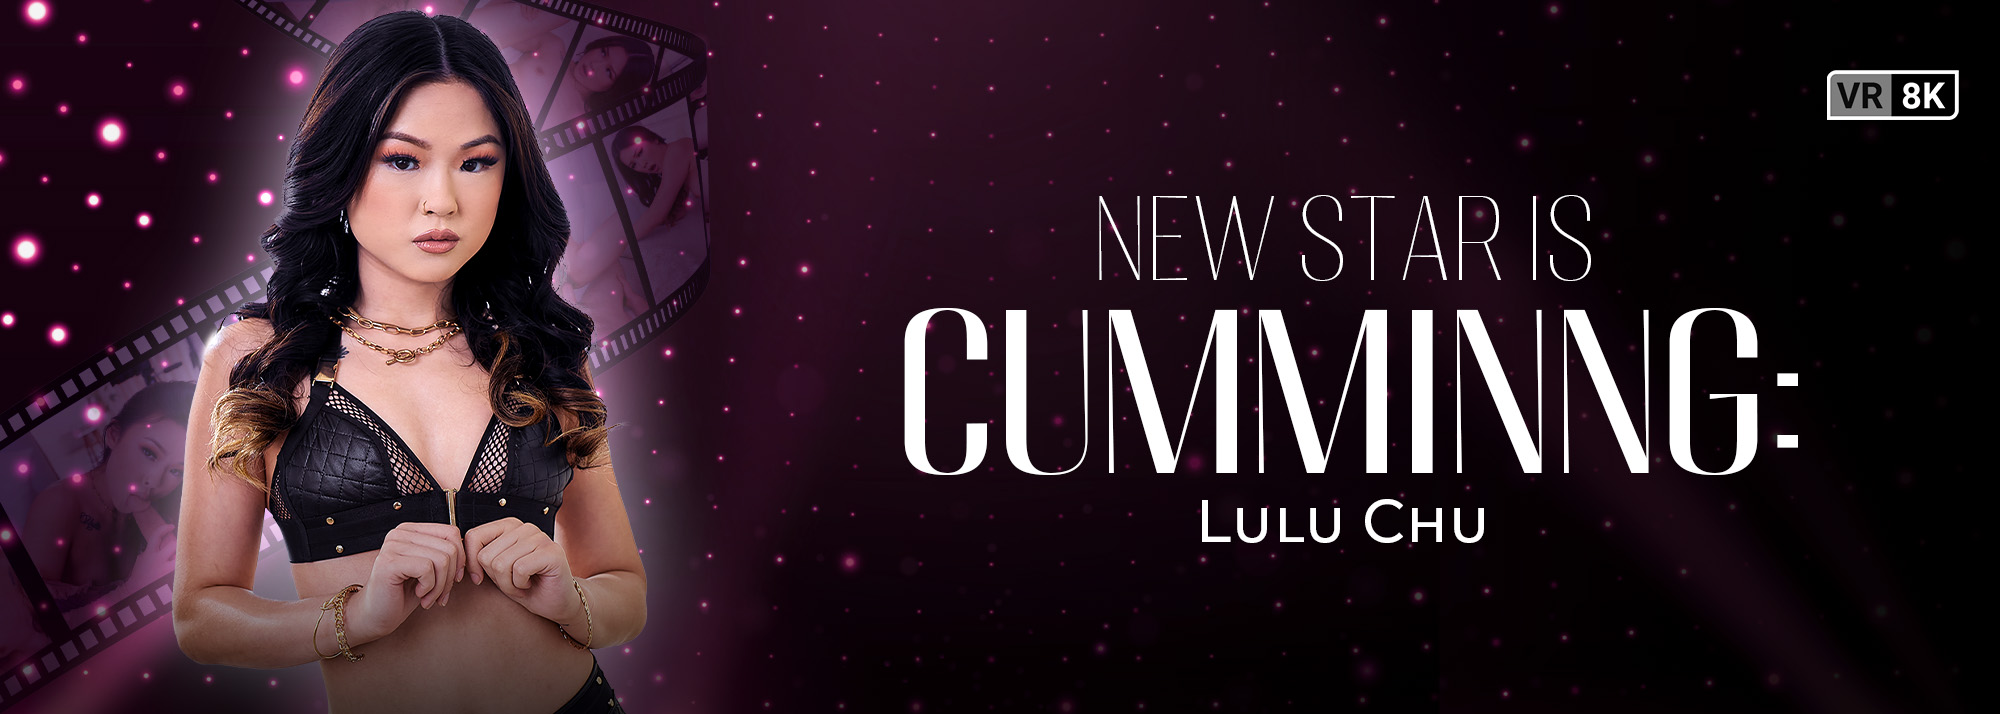 New Star Is Cuming: Lulu Chu - VR Porn Video, Starring: Lulu Chu